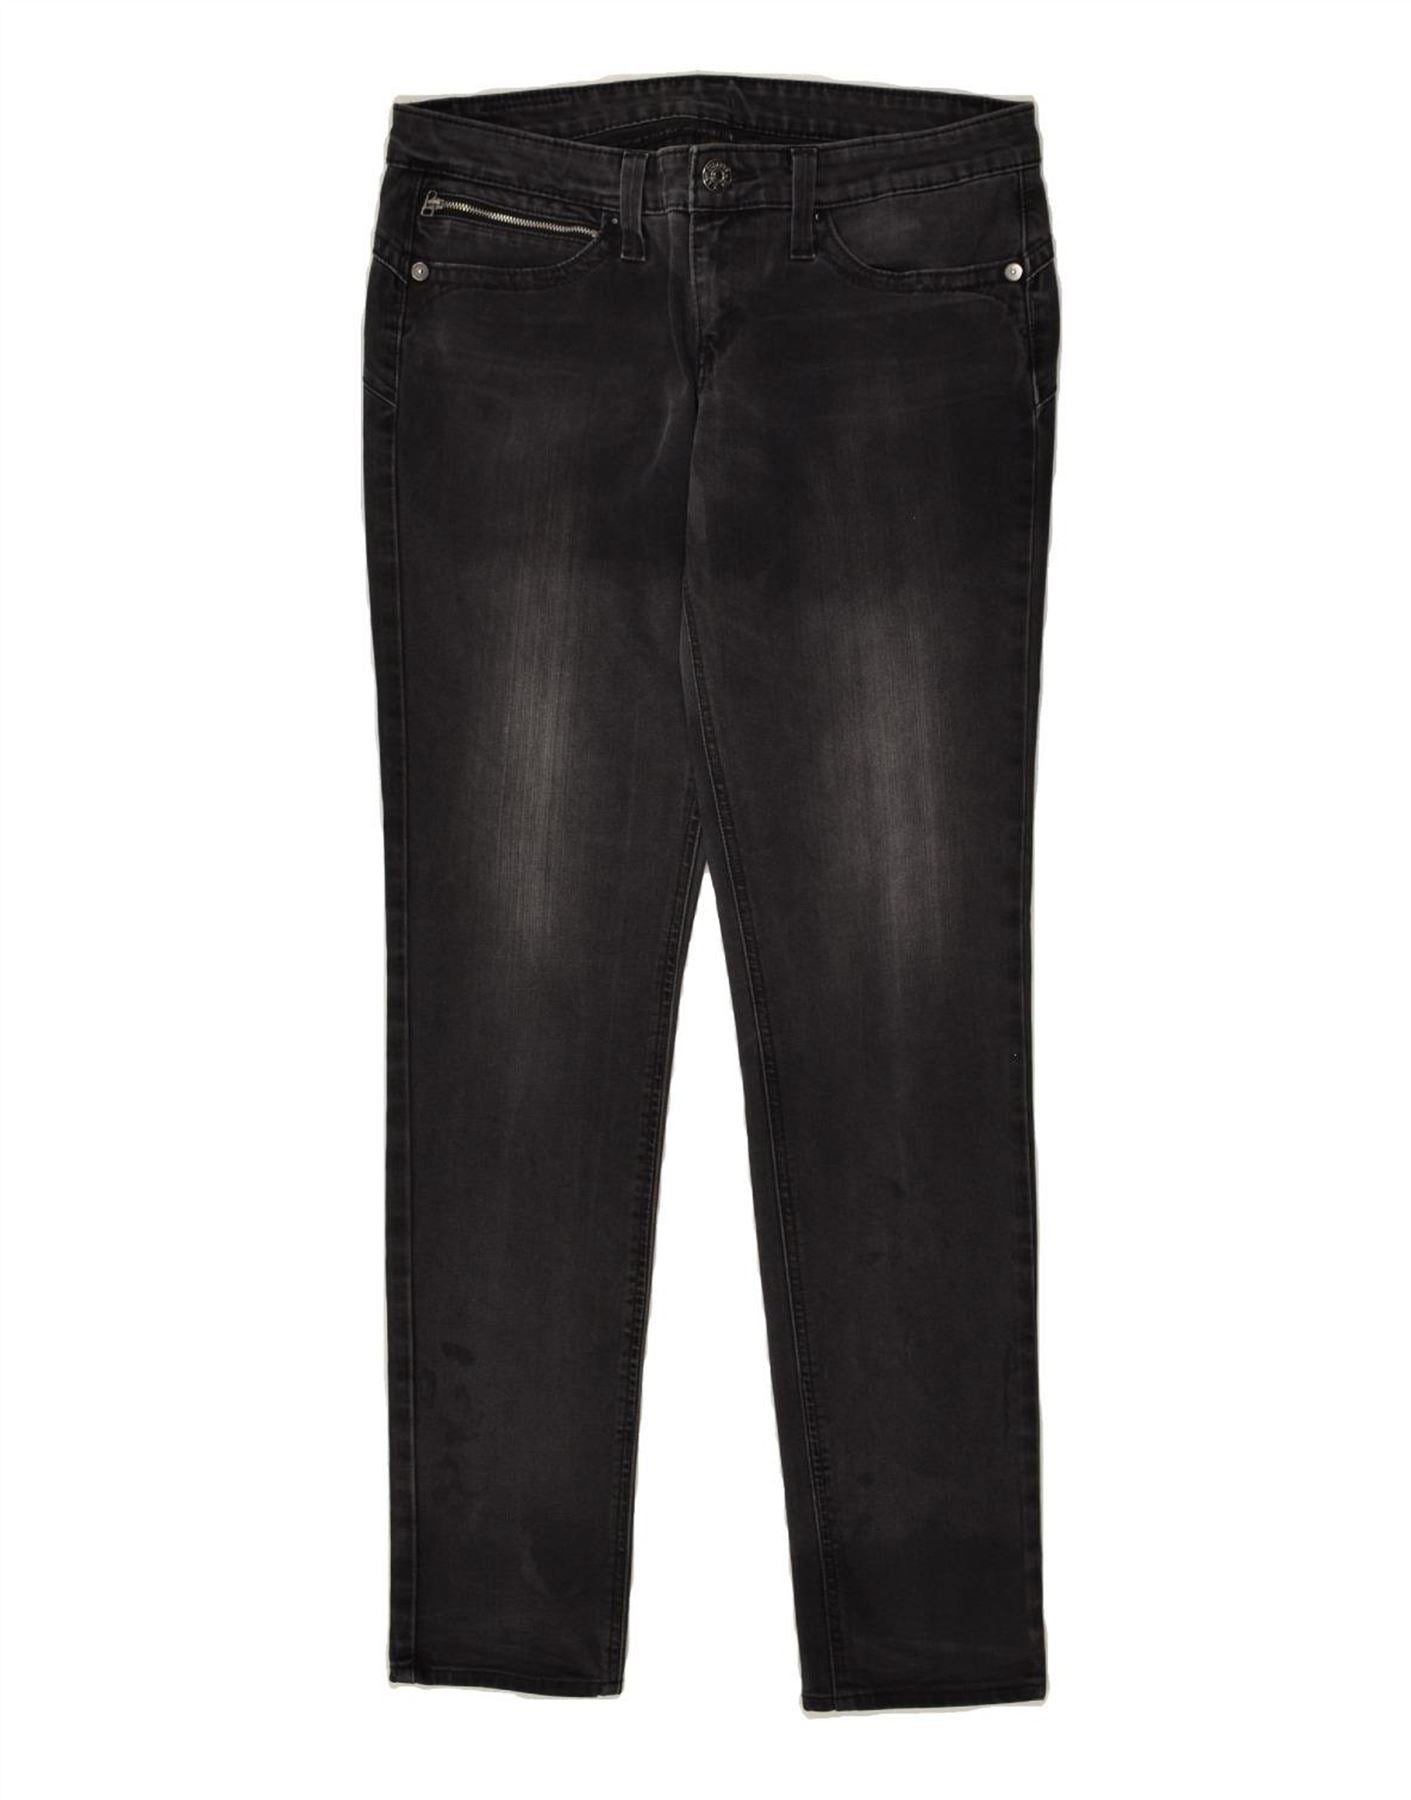 EDDIE BAUER Womens Bootcut Jeans US 18 2XL W38 L32 Blue Cotton, Vintage &  Second-Hand Clothing Online